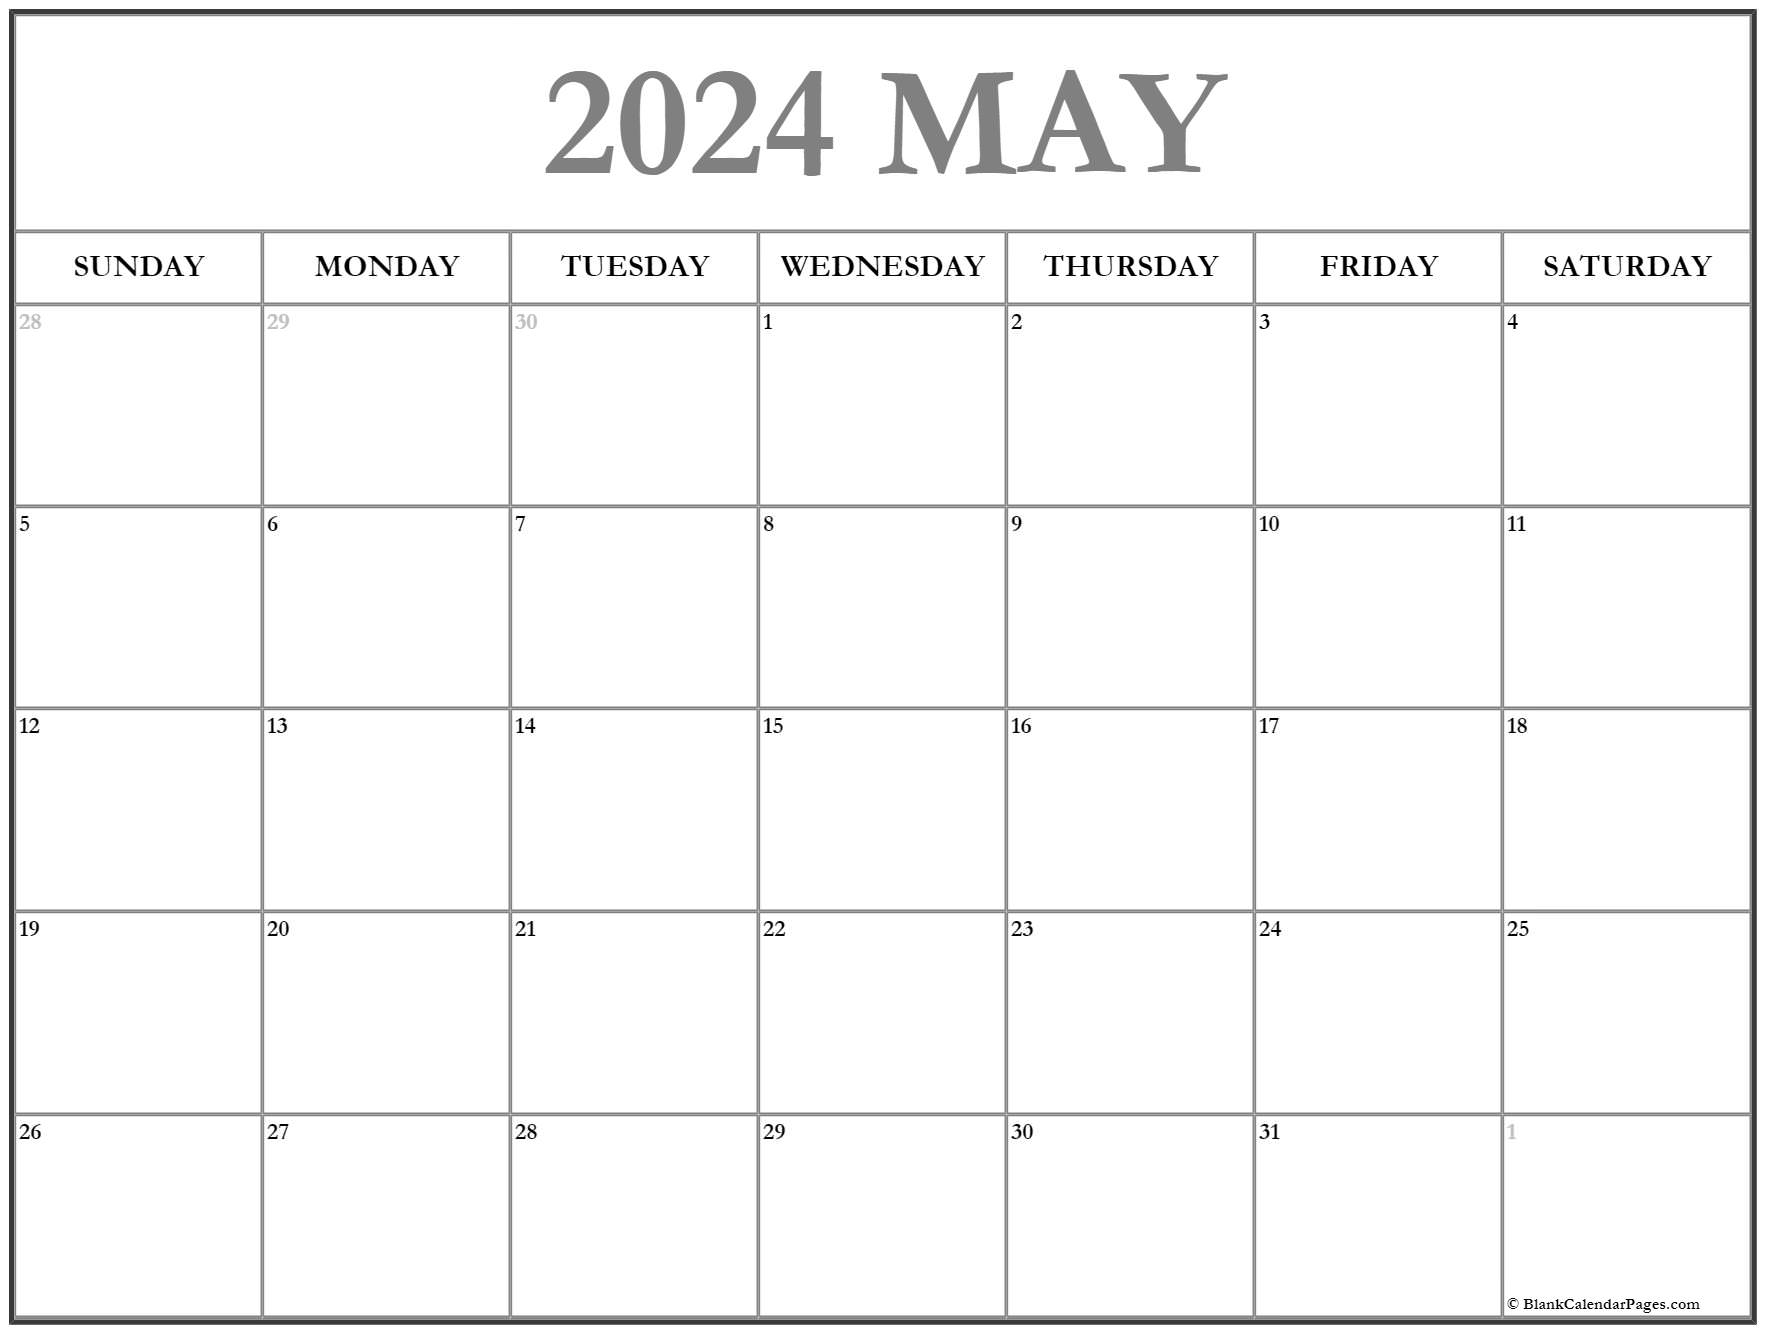 May 2021 calendar | free printable monthly calendars